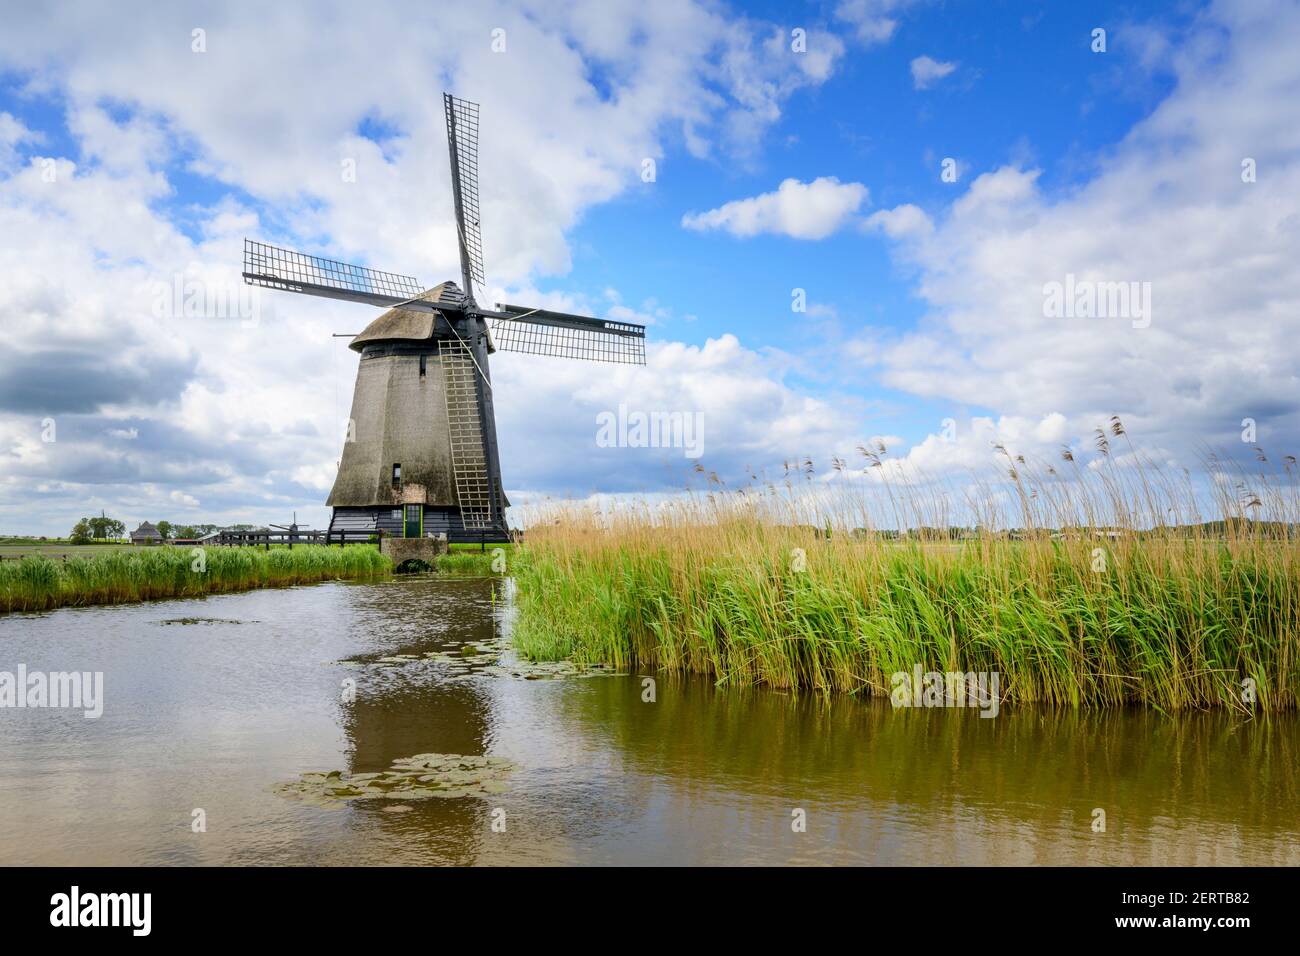 Dutch windmill with reflection in Dutch landscape, Kinderdijk, The Netherlands. Stock Photo